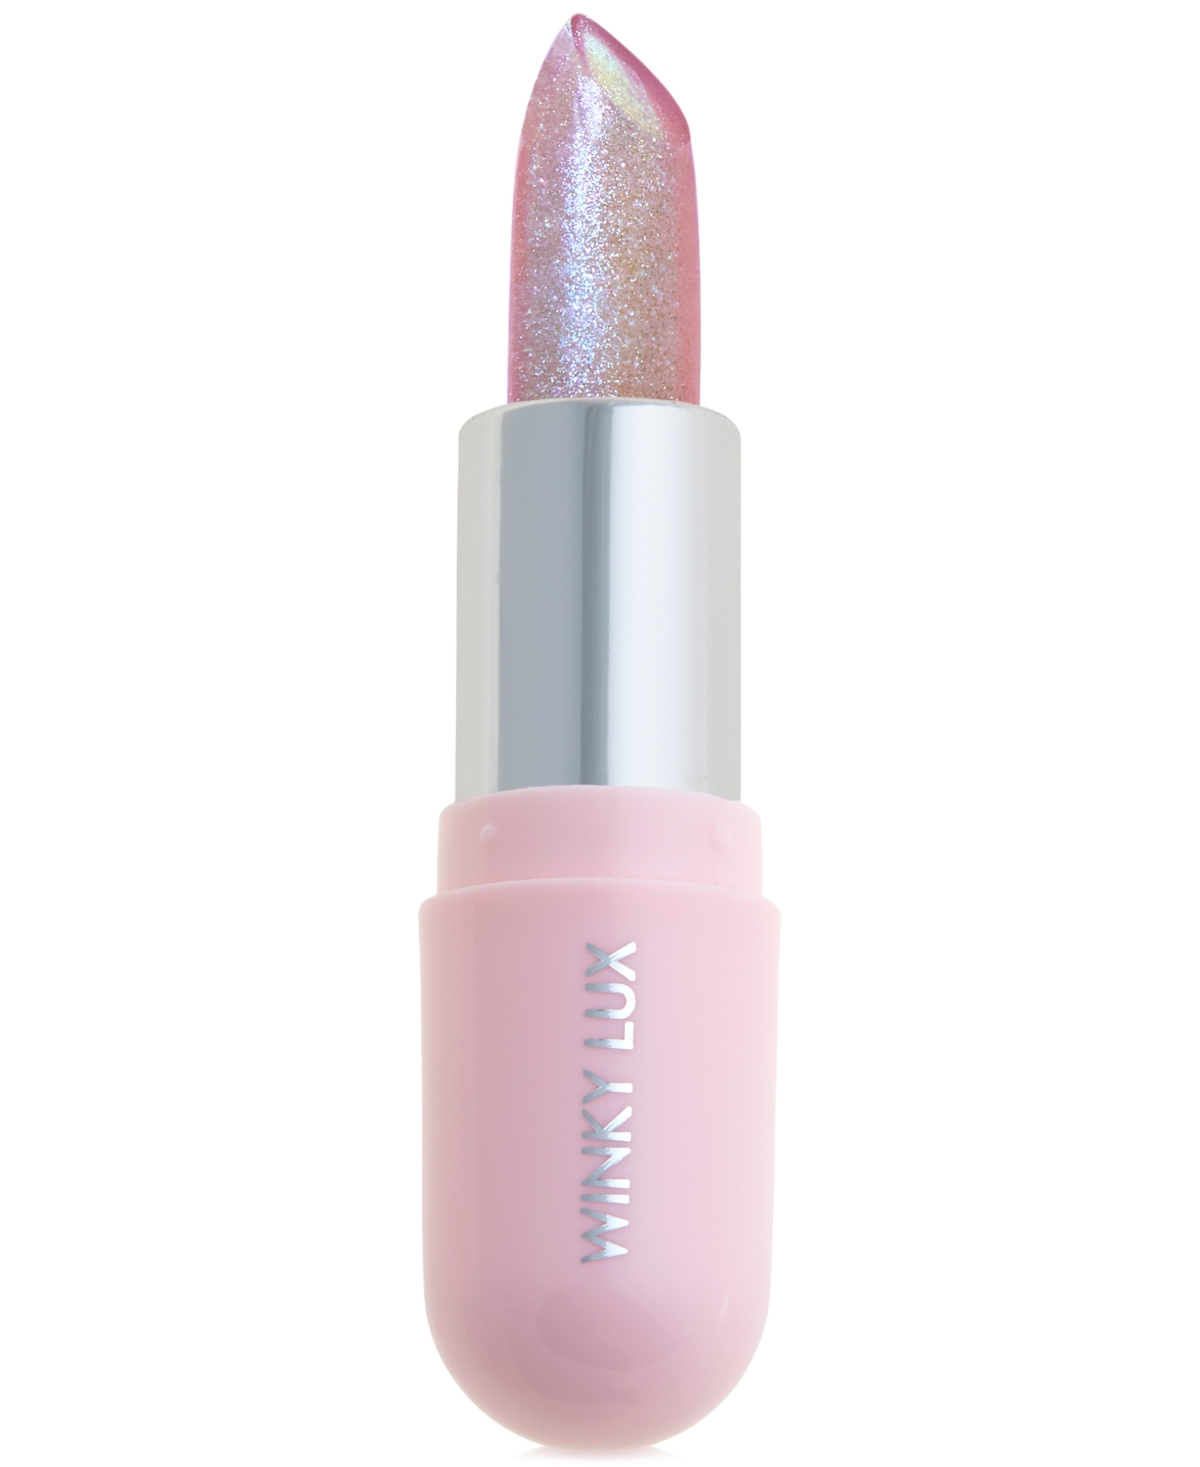 Glimmer Balm - Unicorn - Unicorn: Pink with holographic sparkle